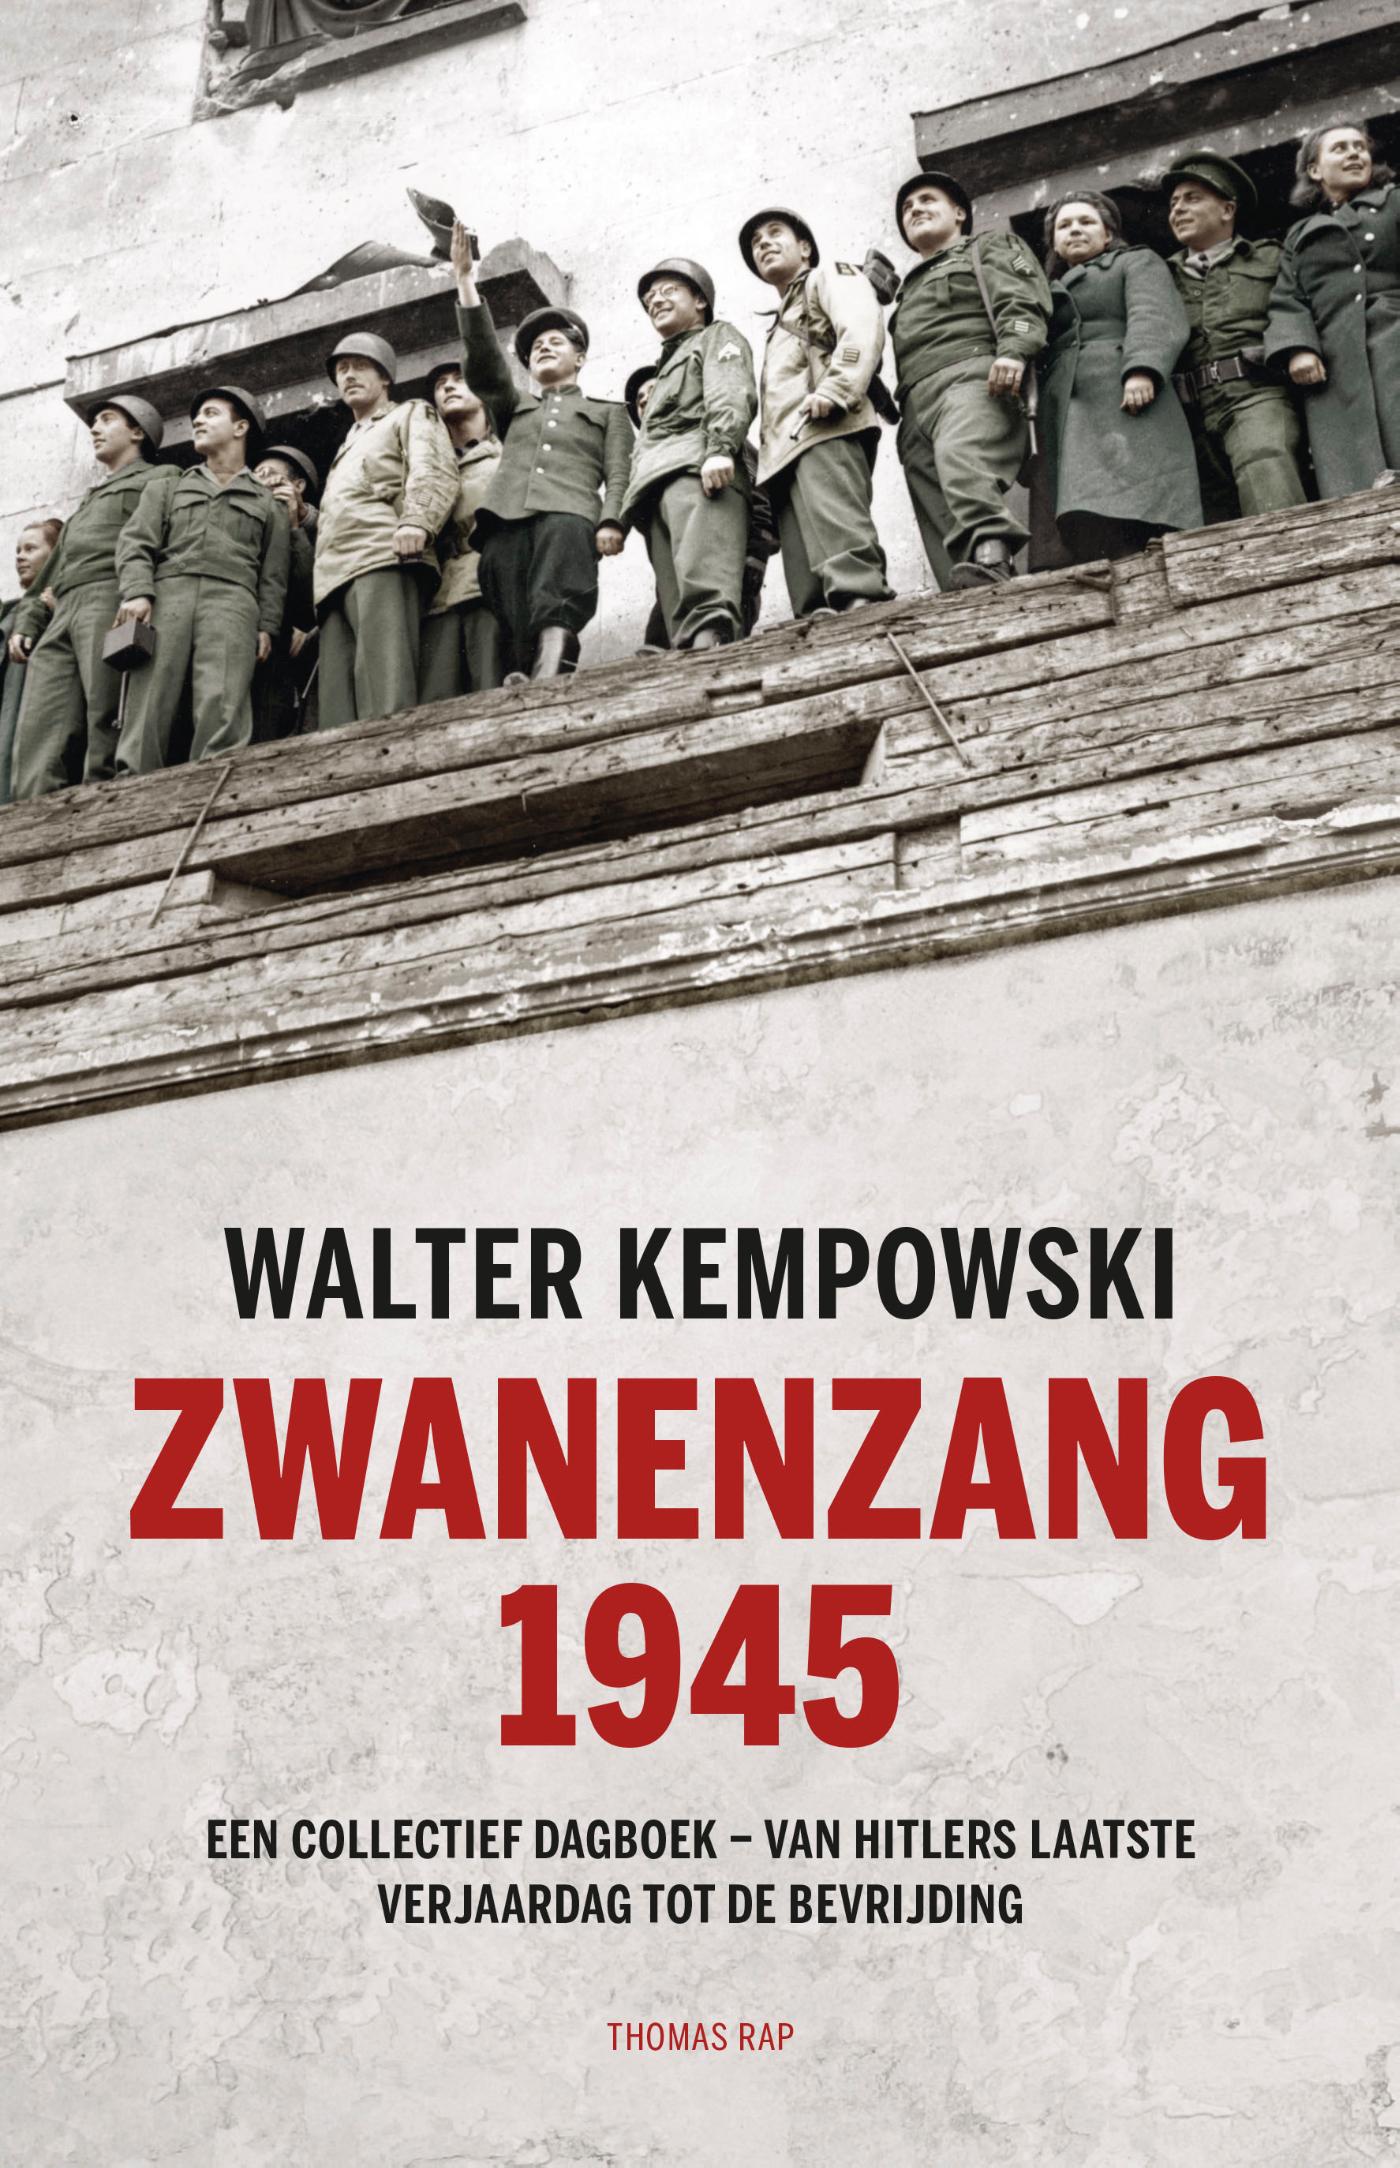 Zwanenzang 1945 (Ebook)